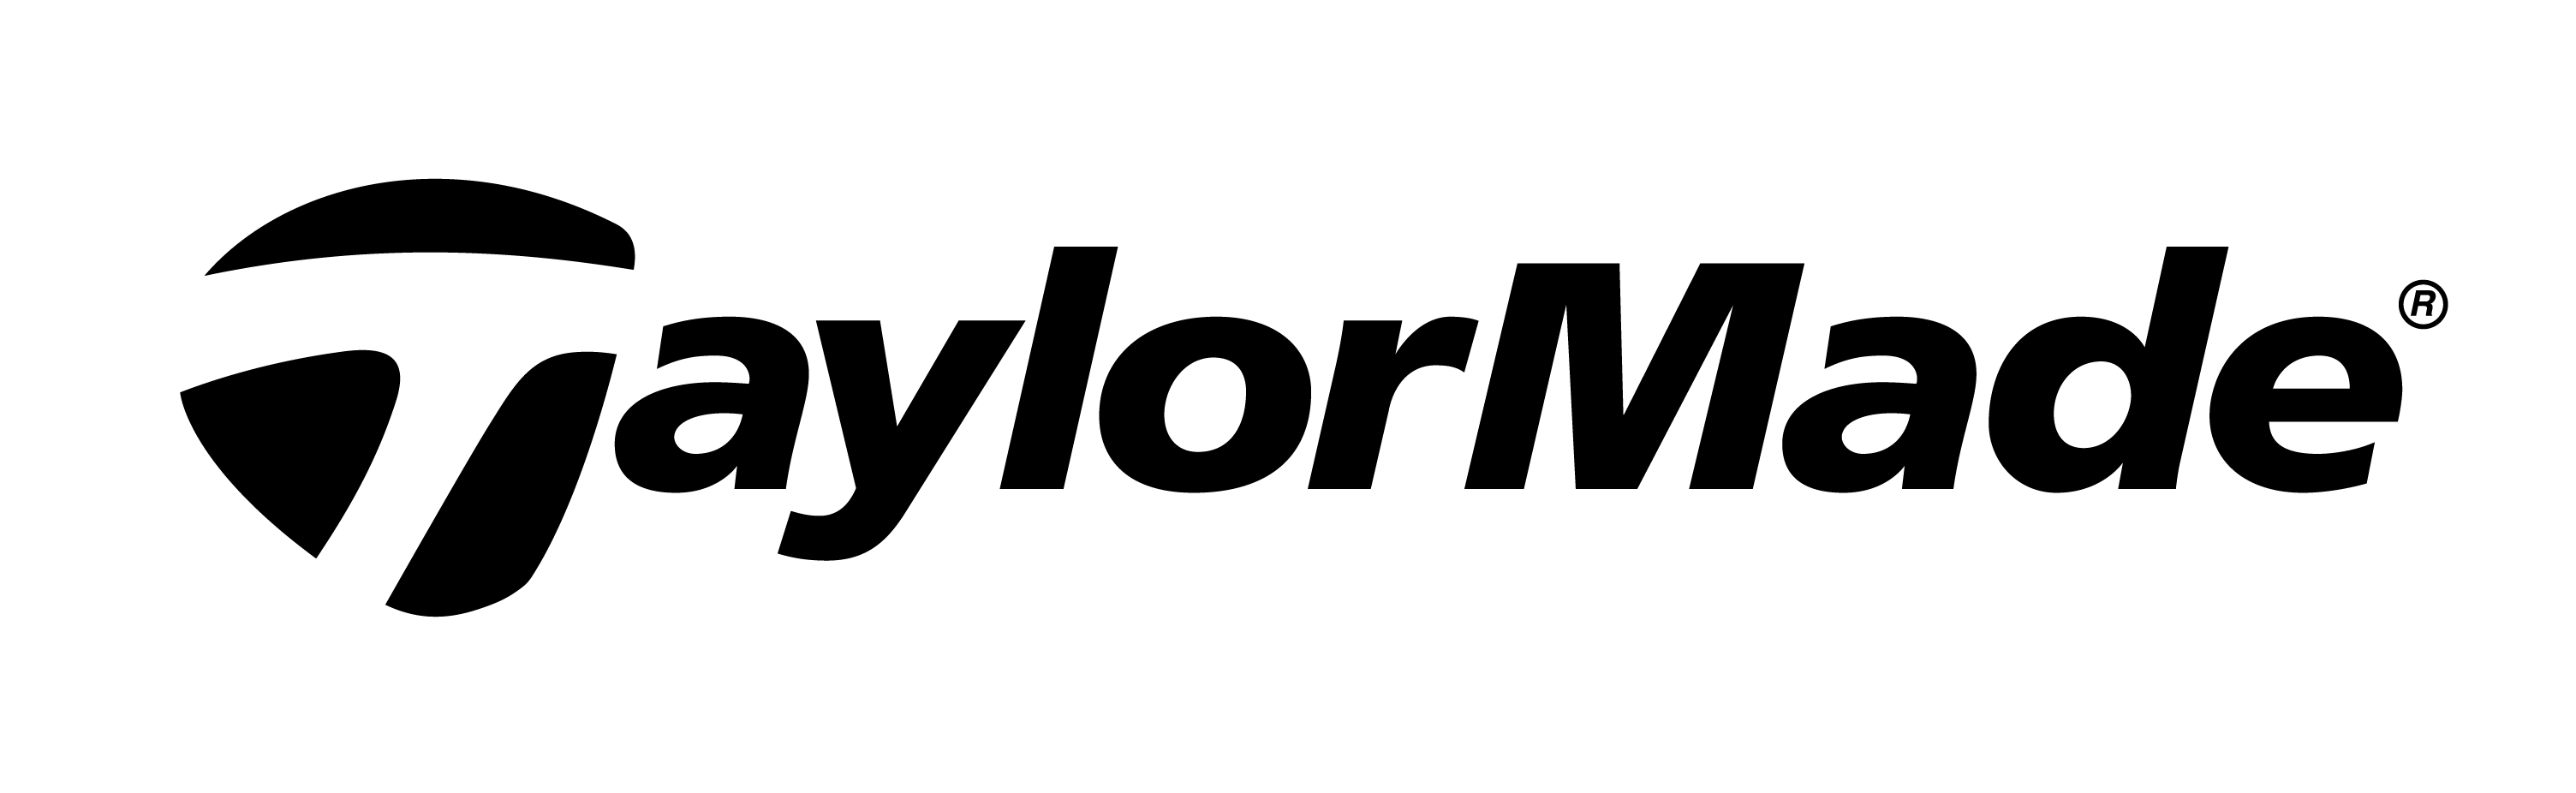 Official partner logo for National